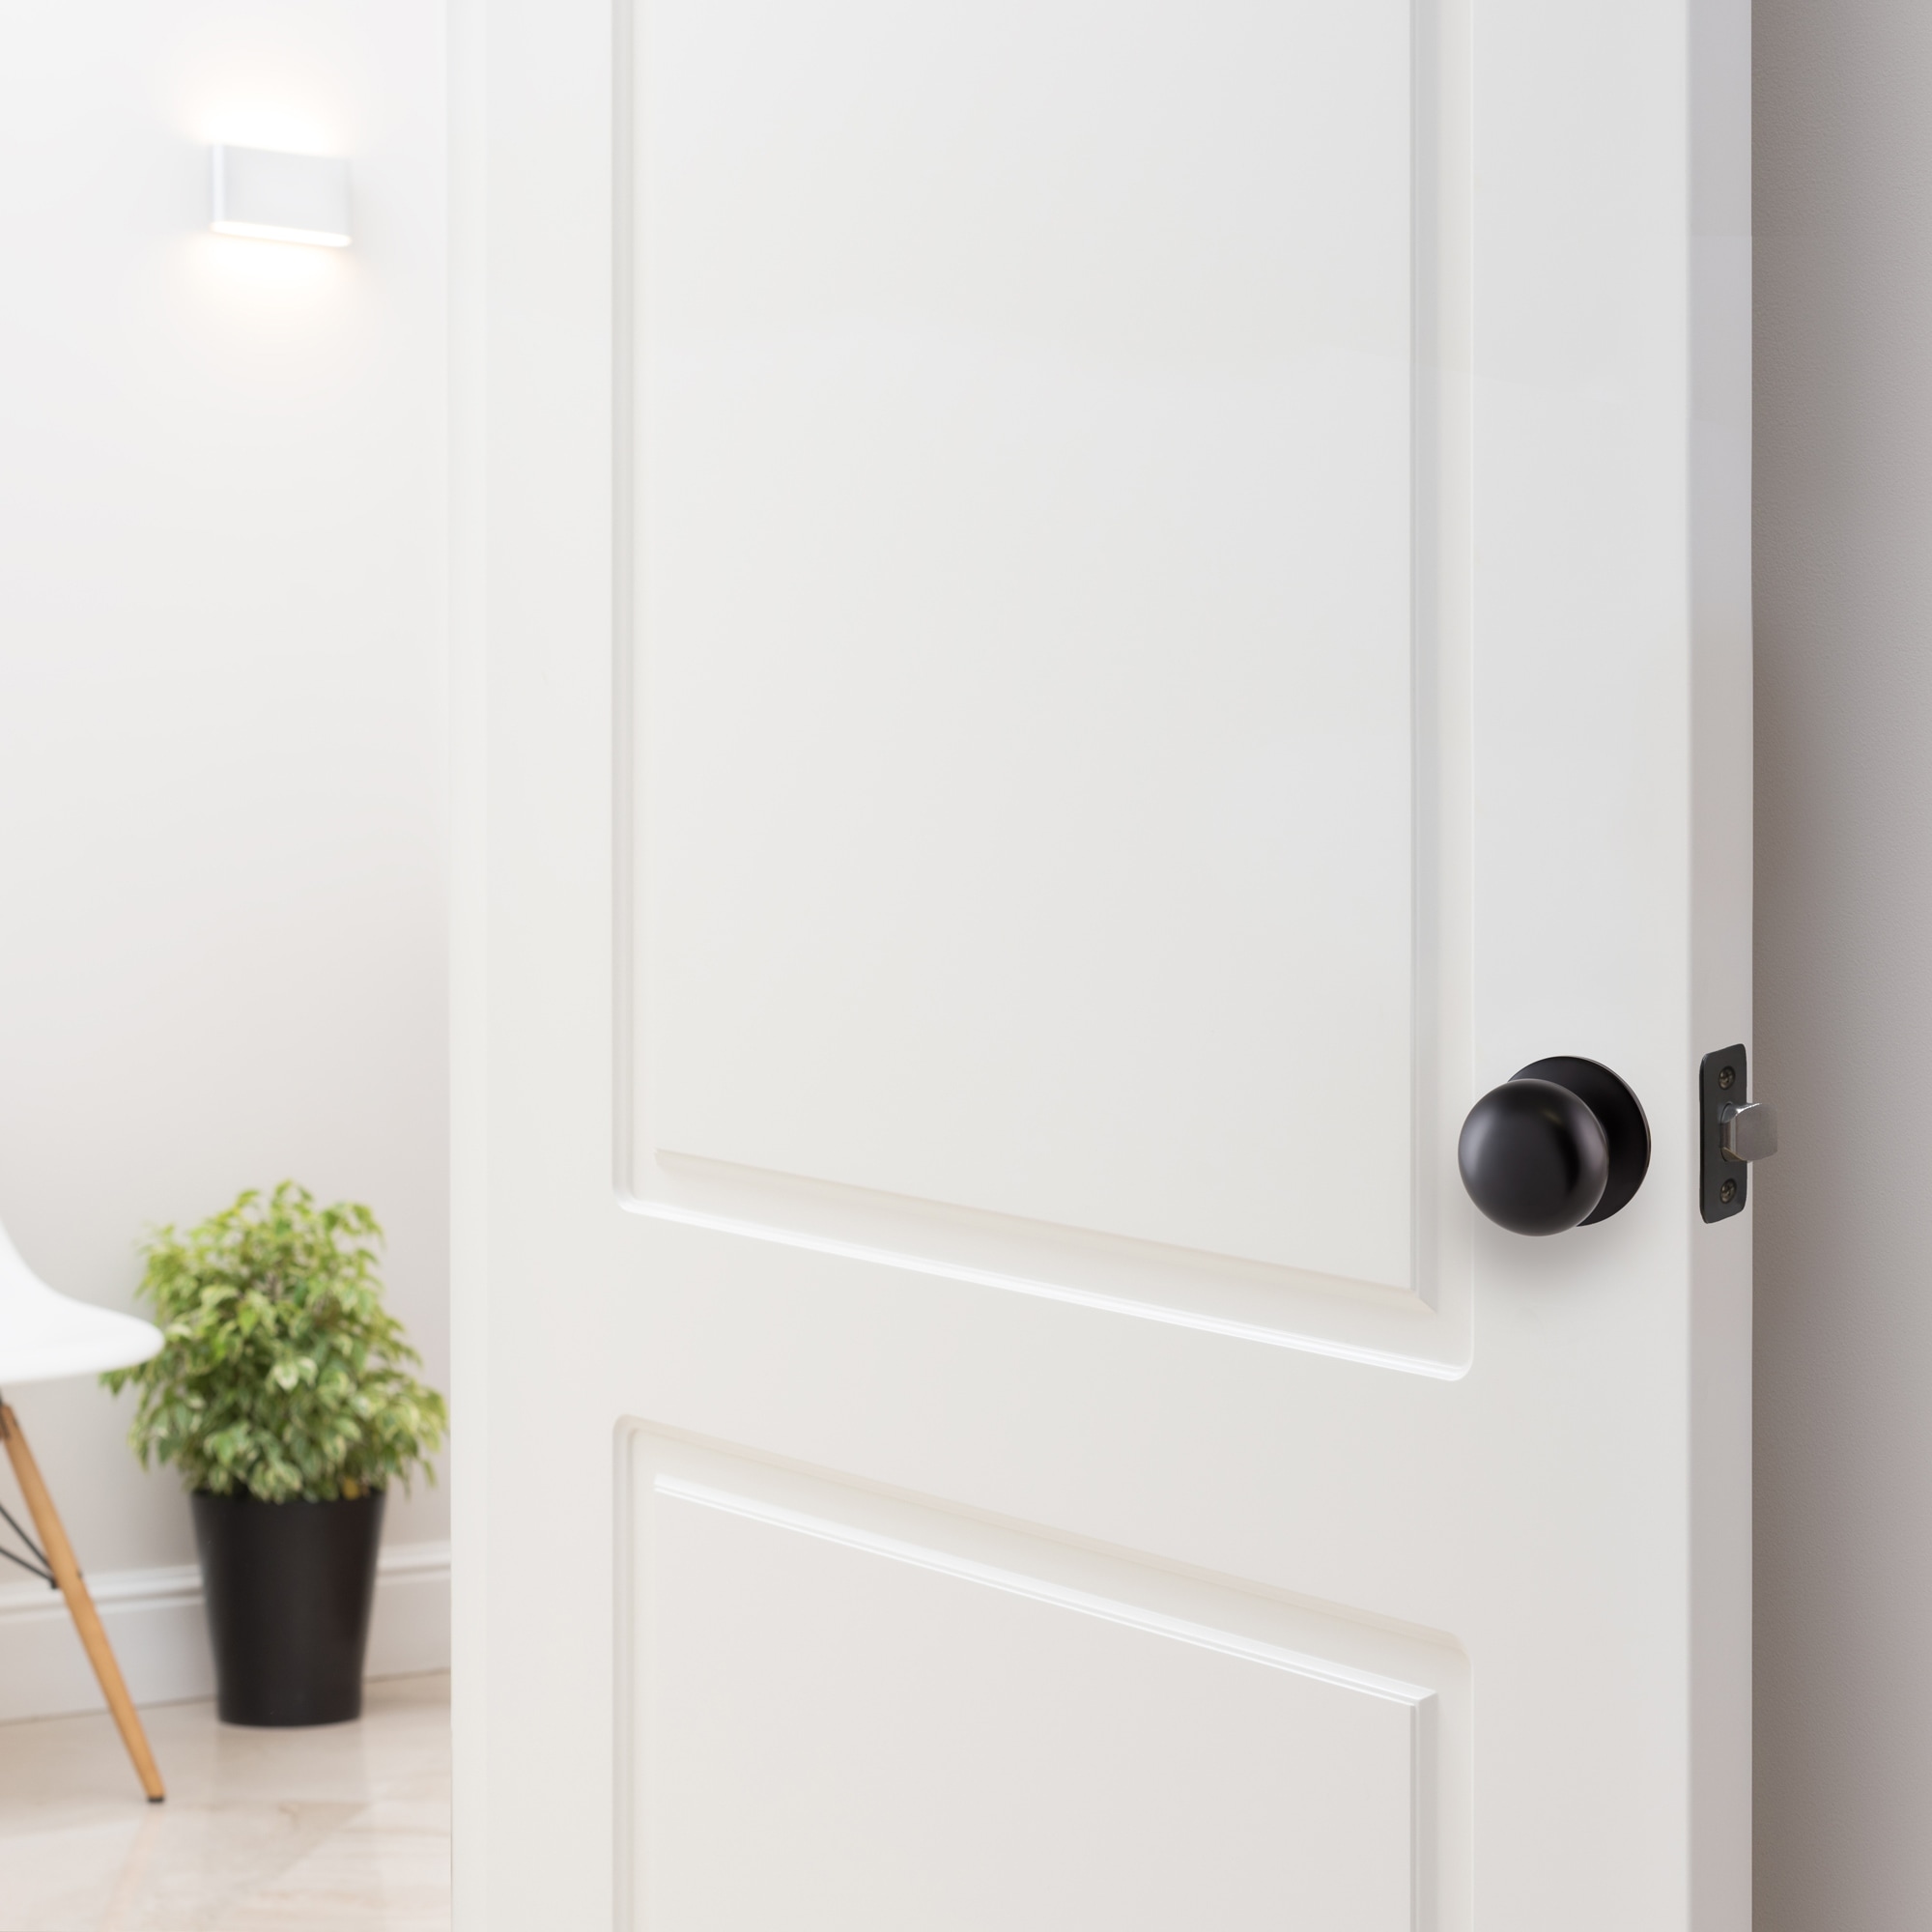 2 Pack Door Knob and Lock Set Versa Keyed by Villar Home Designs